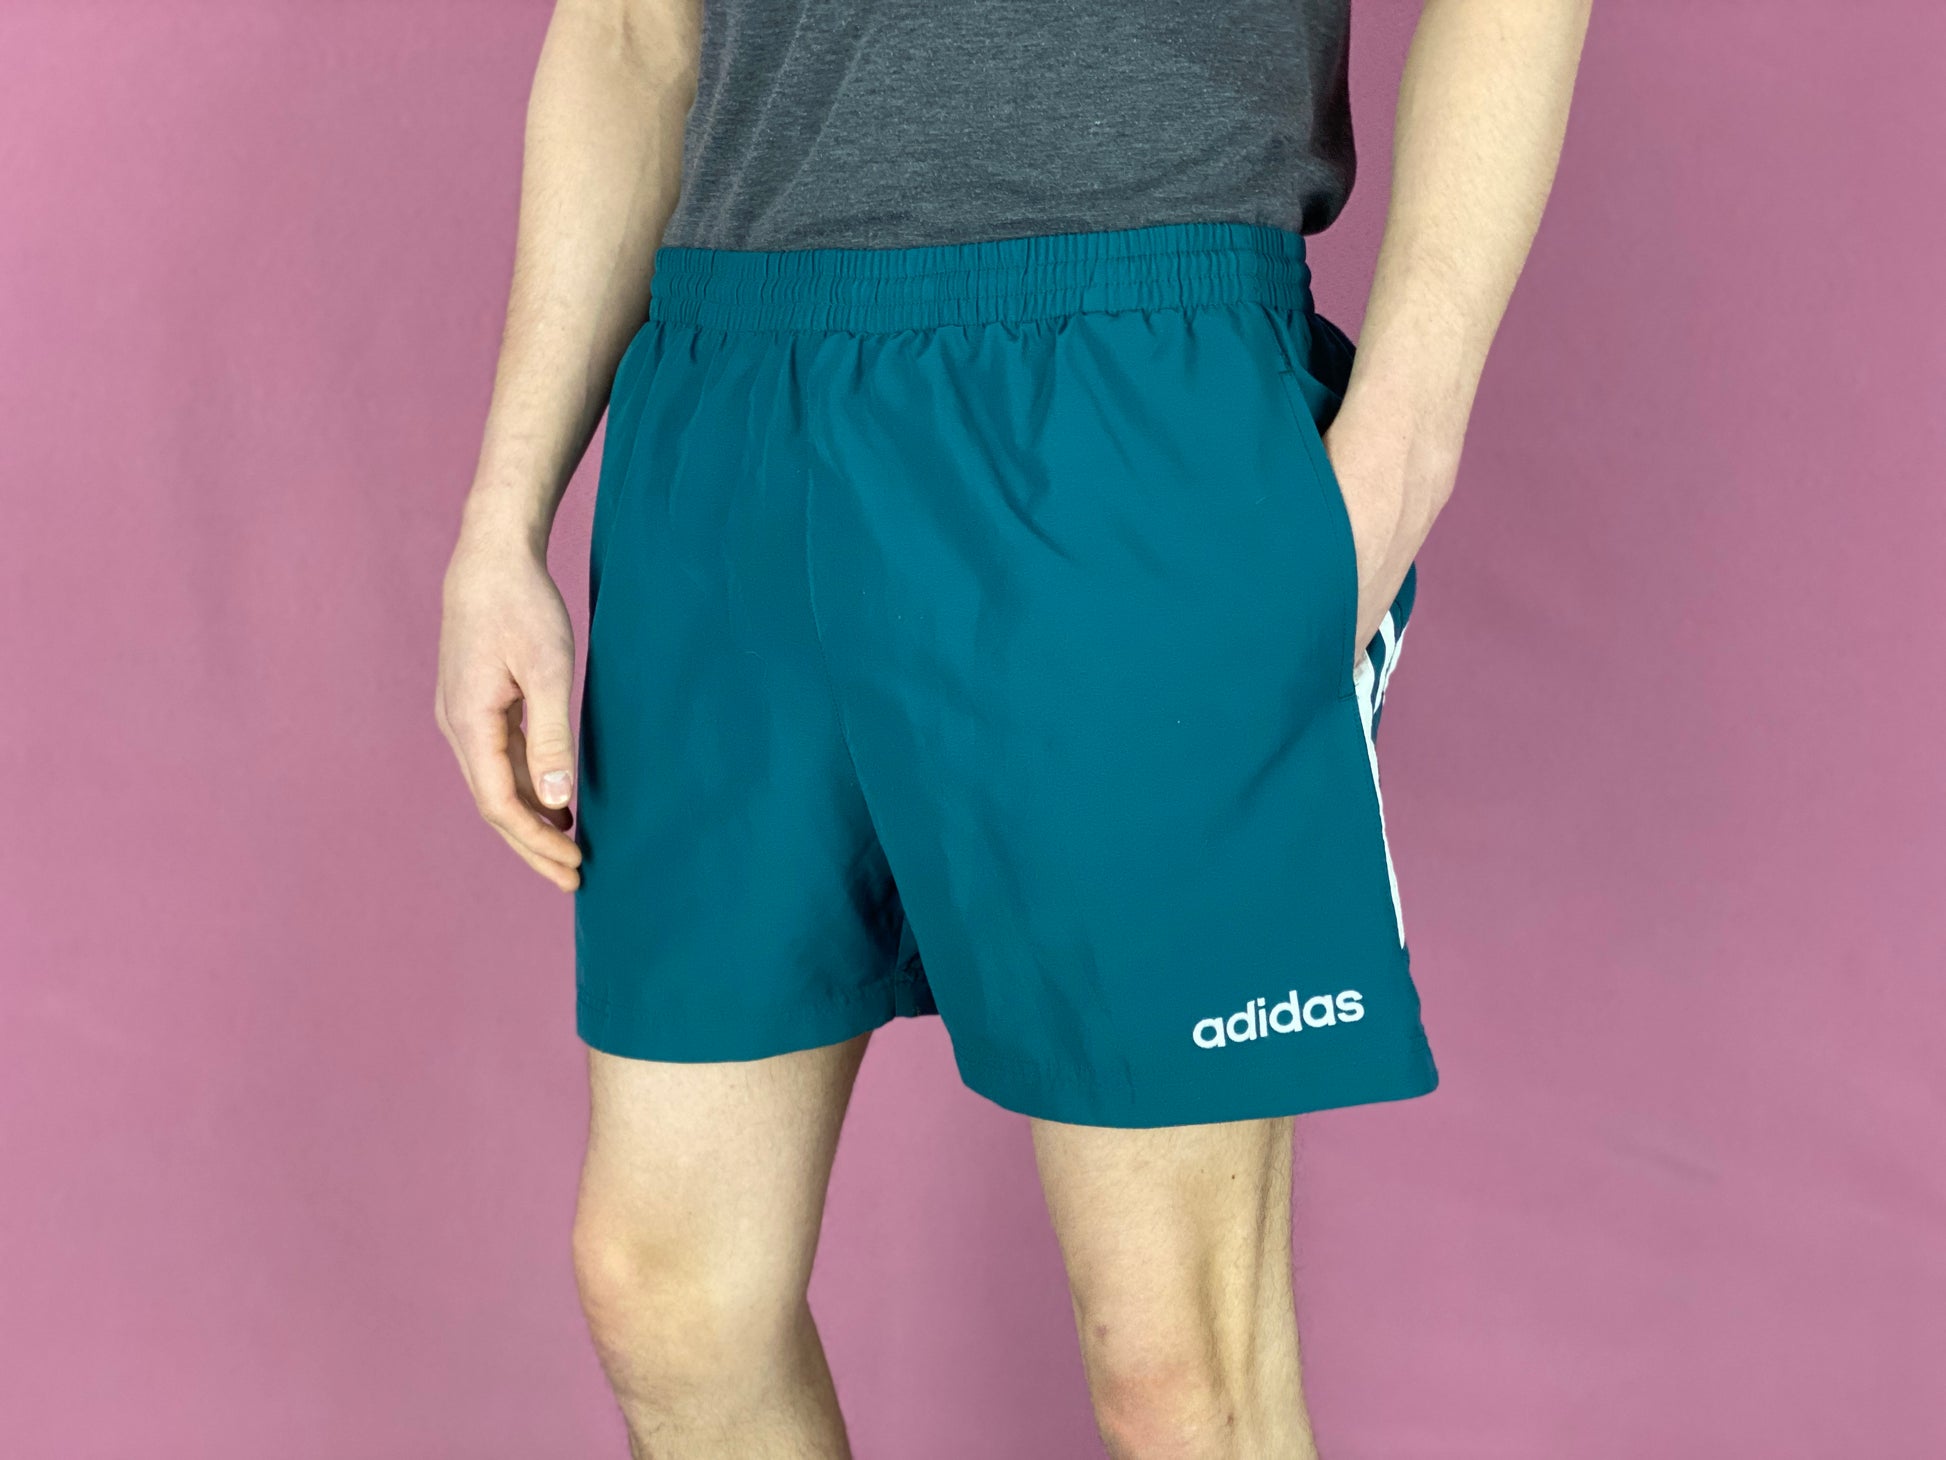 90s Adidas Vintage Men's Sport Shorts - Large Green Polyester